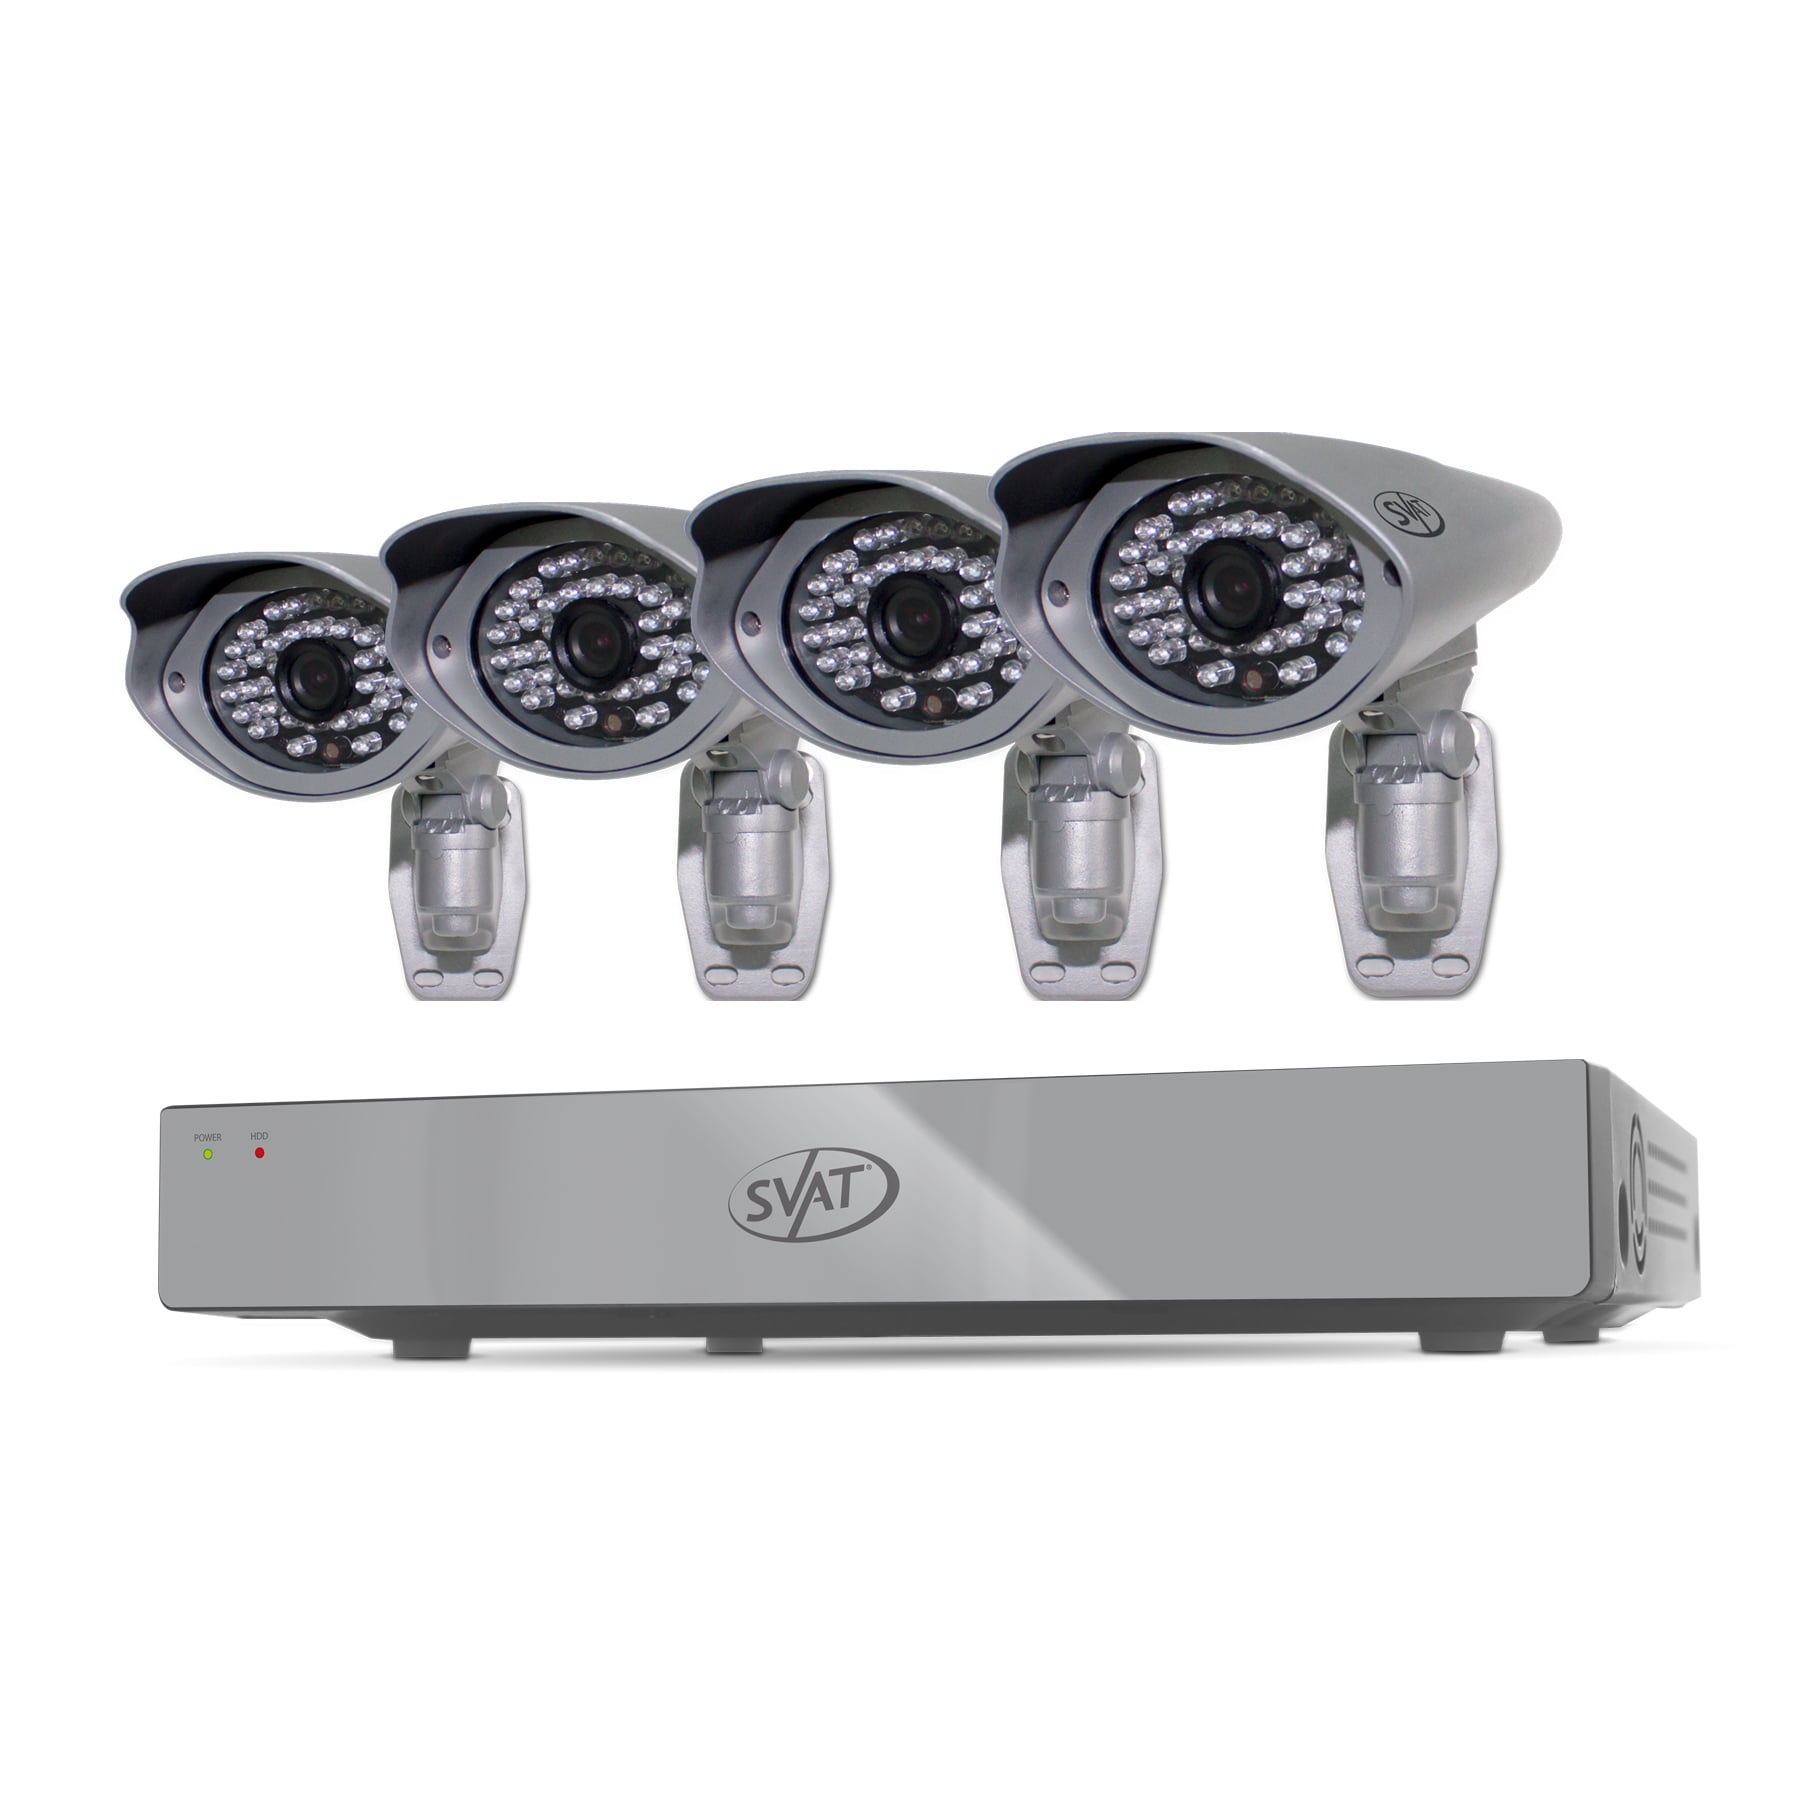 svat surveillance camera system